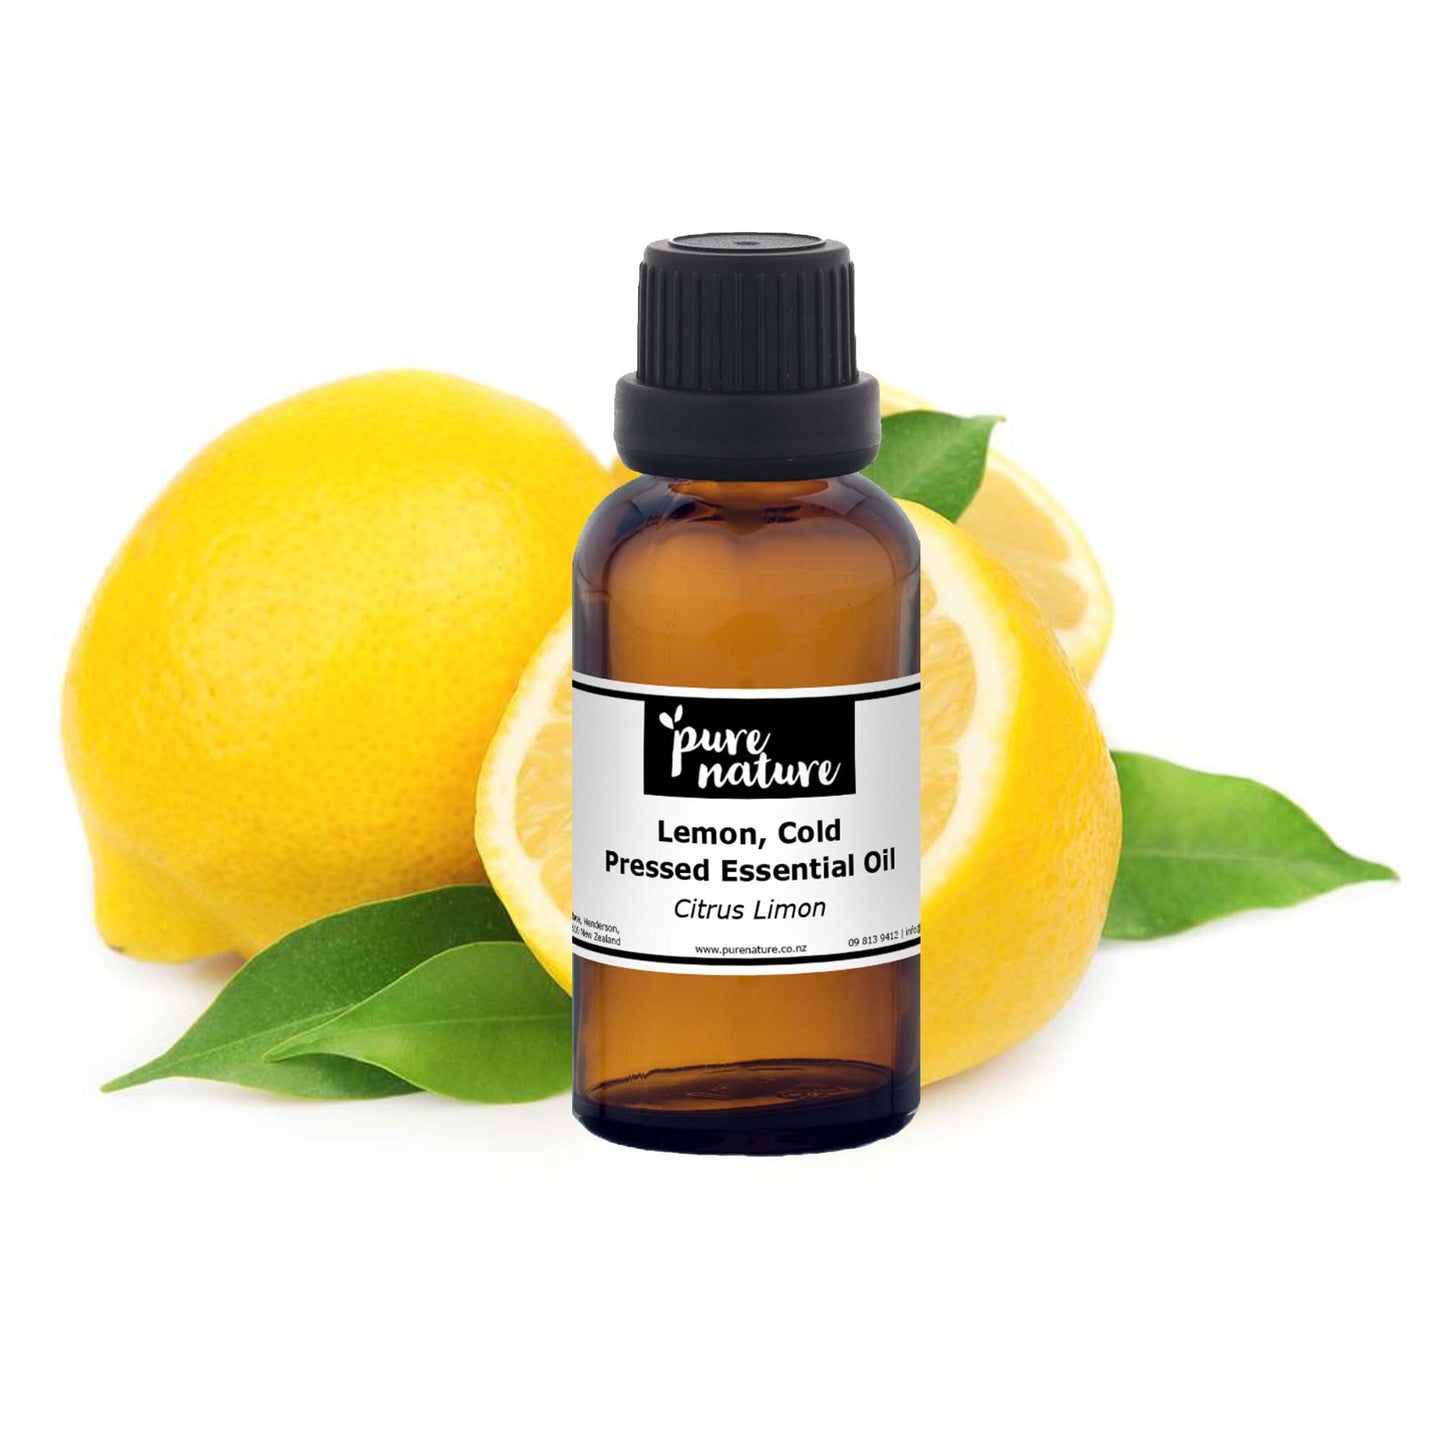 Lemon, Cold Pressed Essential Oil